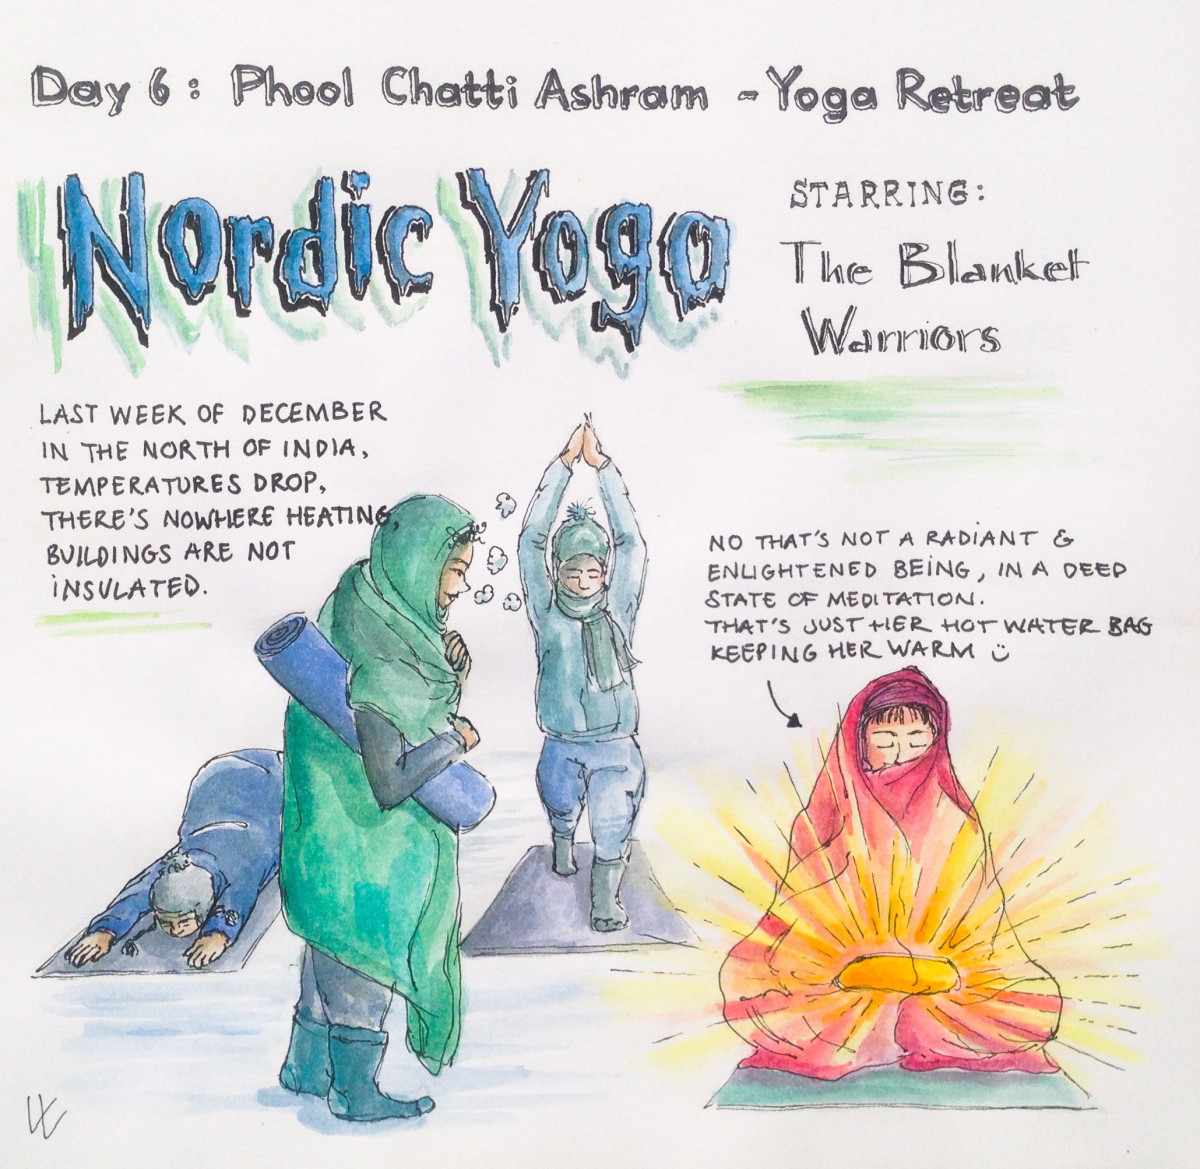 6 - nordic yoga